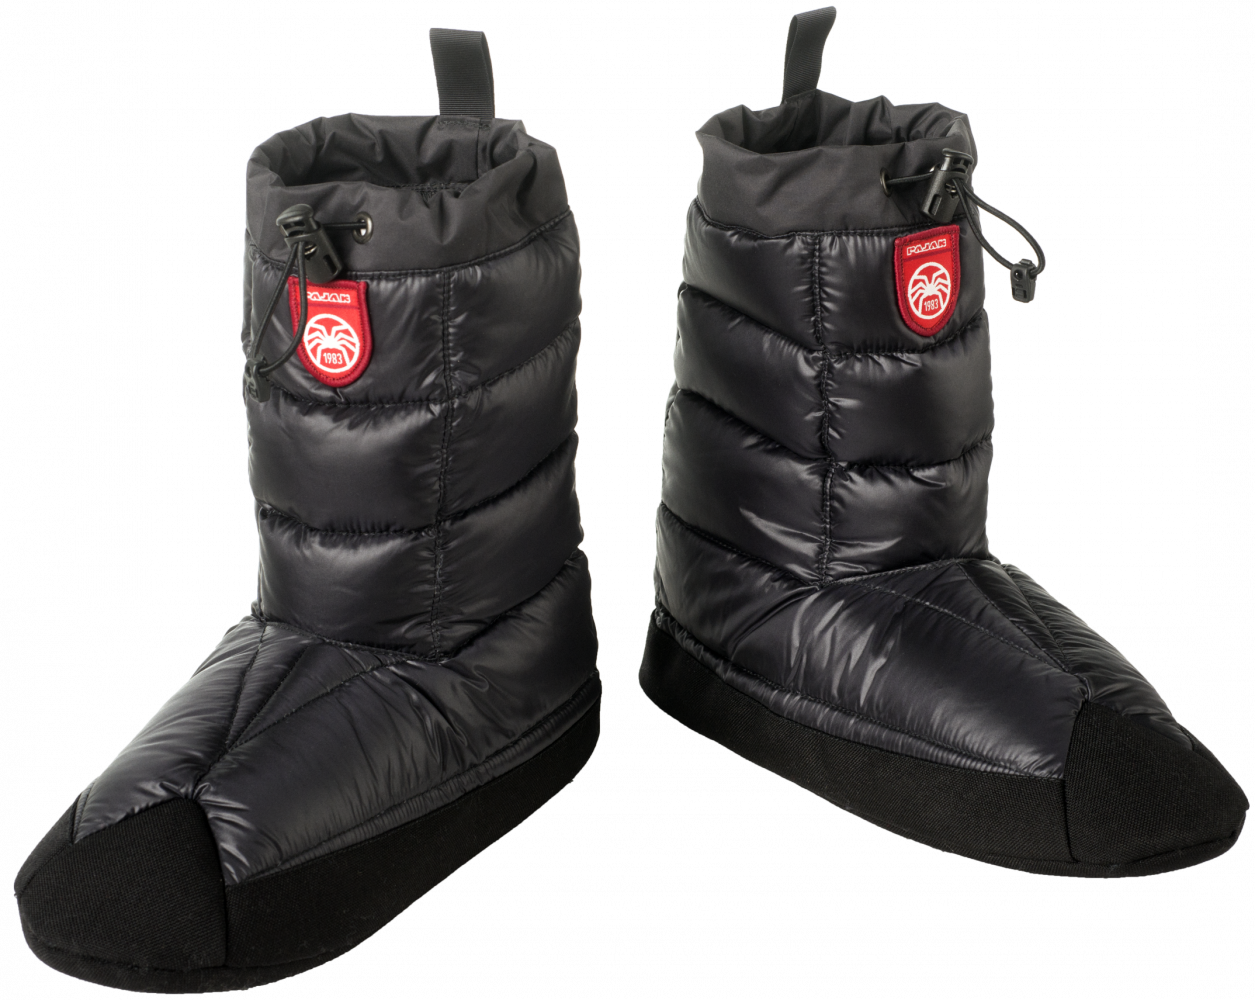 boots_black_front_pair